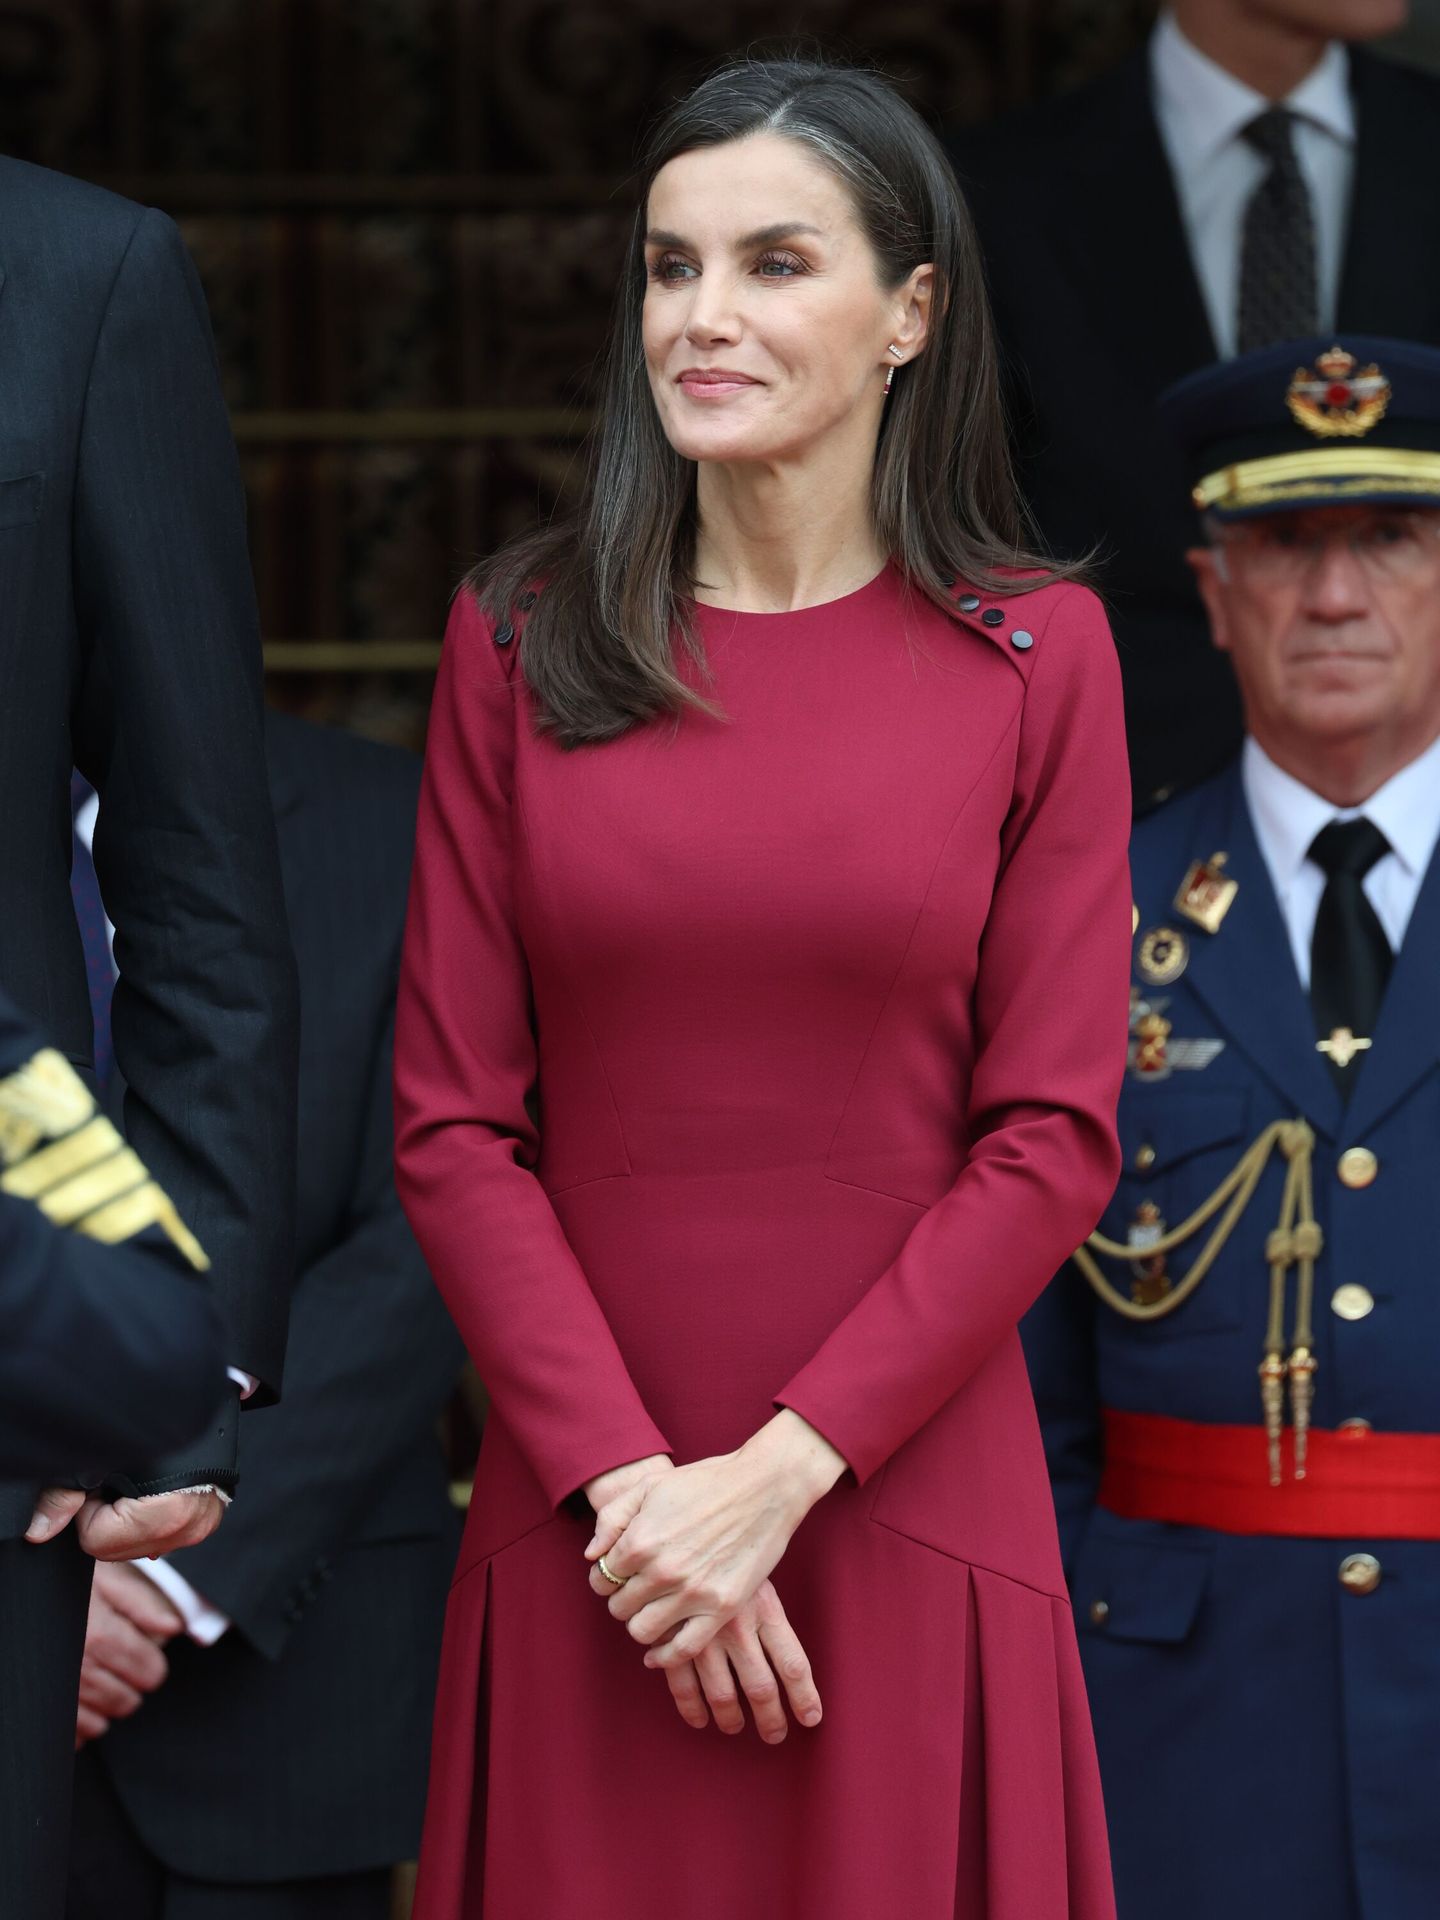 La reina Letizia en la apertura de las Cortes Generales. (Europa Press/Raúl Seler)